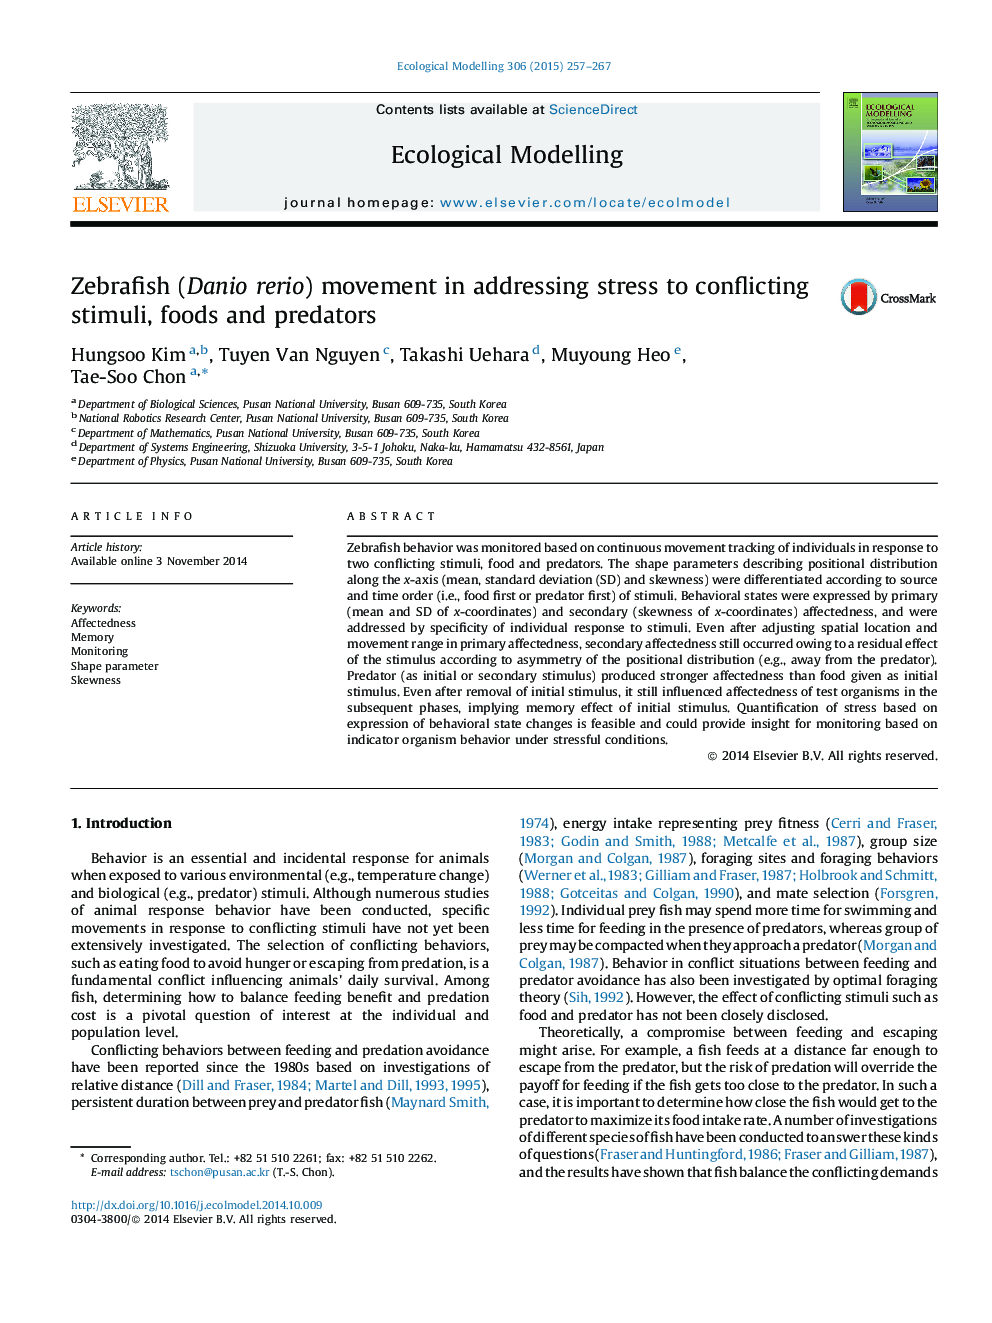 Zebrafish (Danio rerio) movement in addressing stress to conflicting stimuli, foods and predators